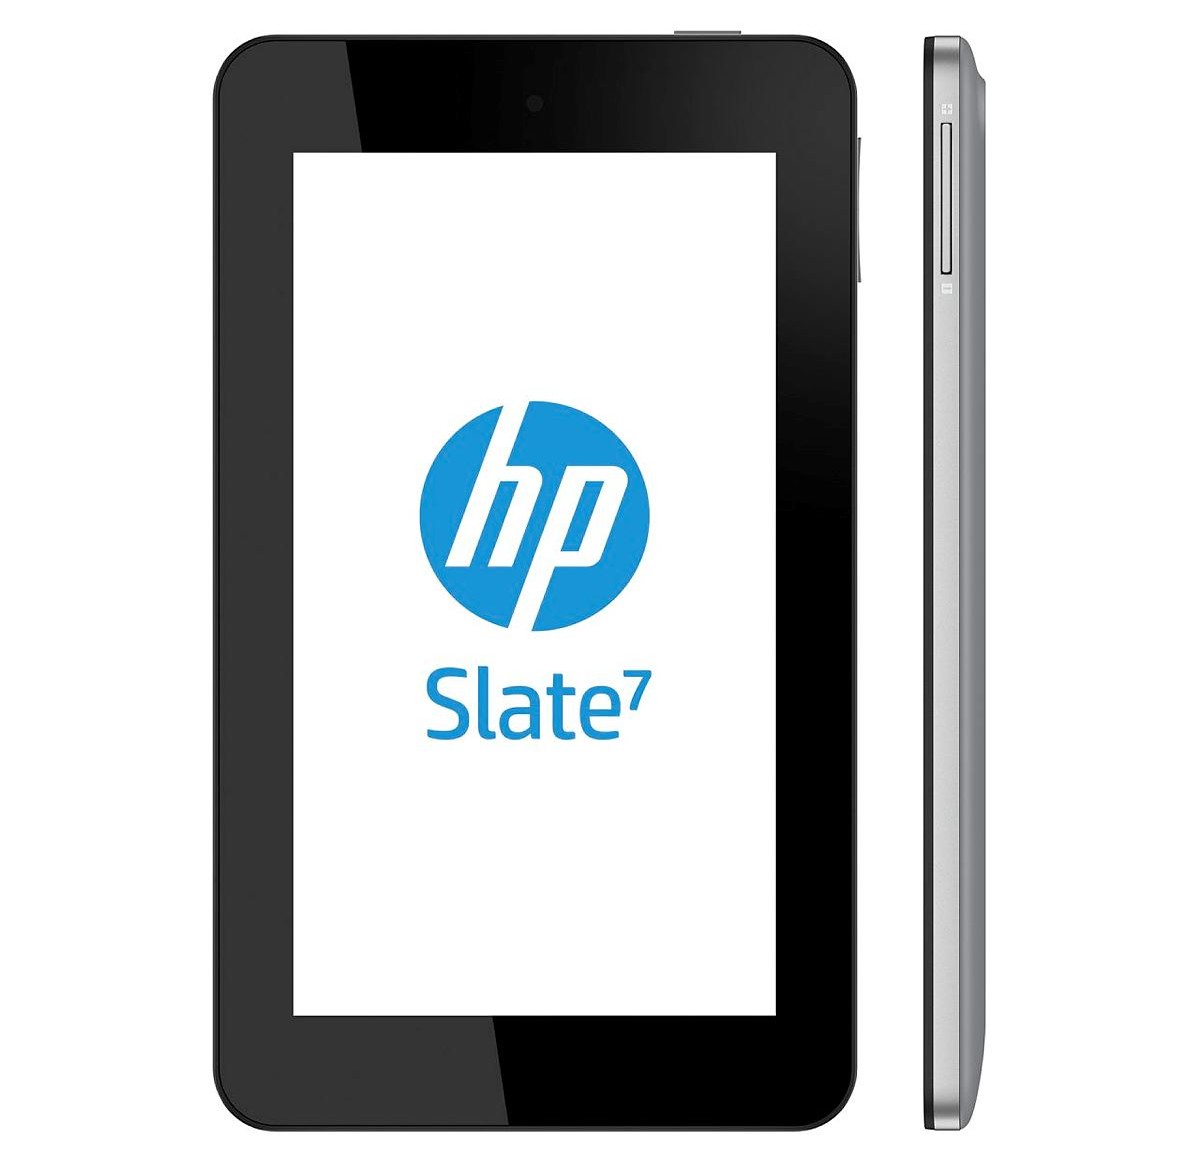 HP Slate7 - первый планшет с Beats Audio